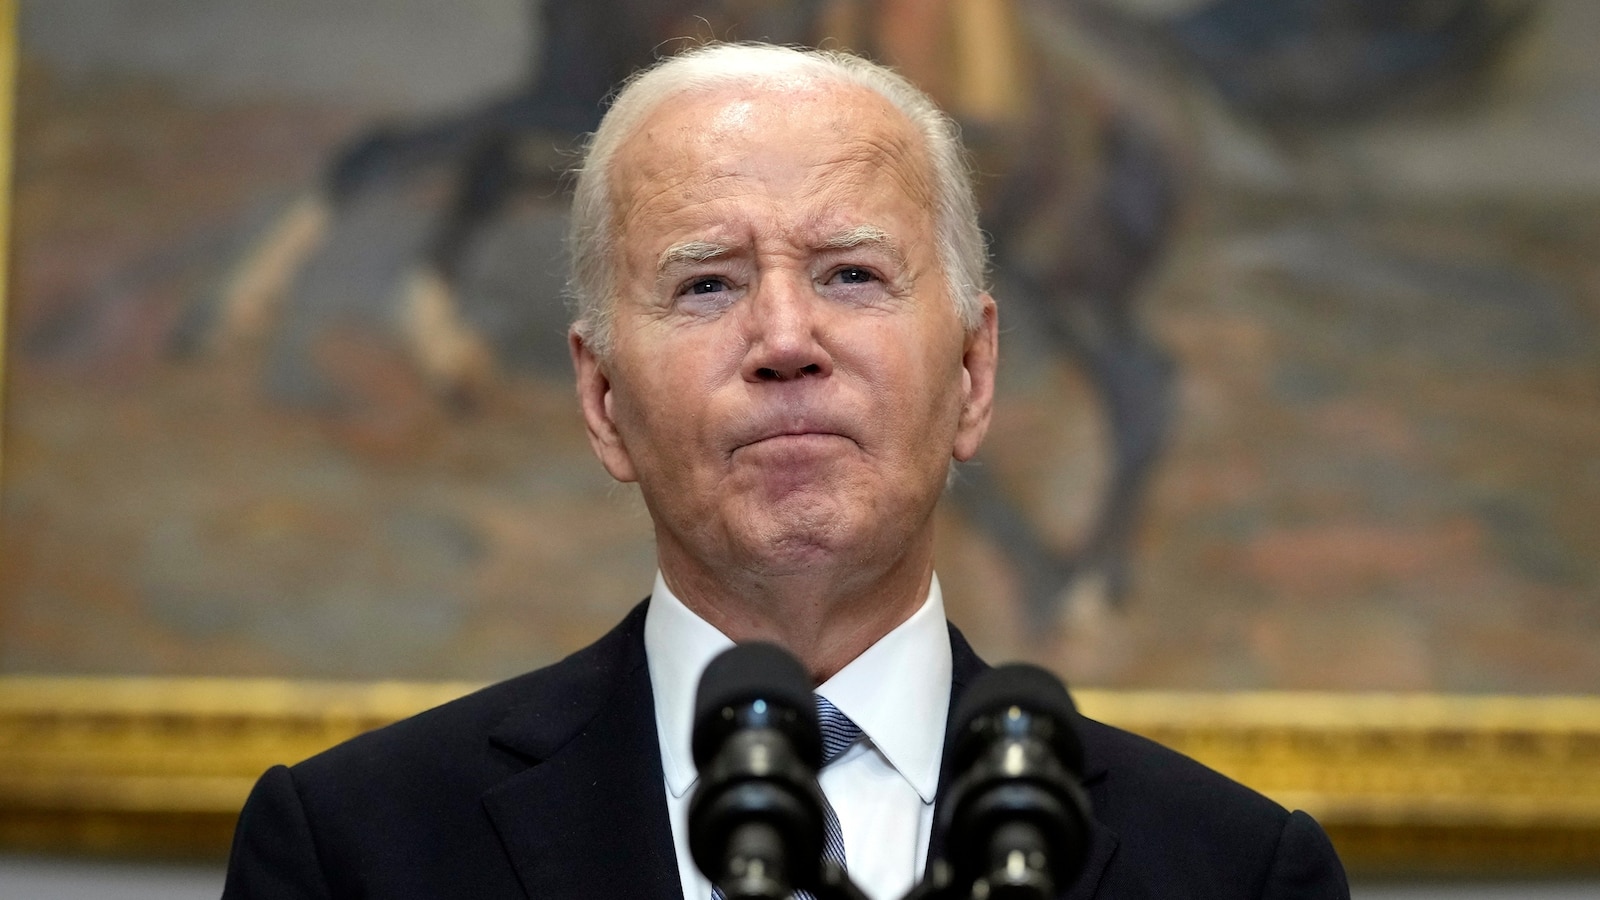 Joe Biden just dropped out. What happens next?